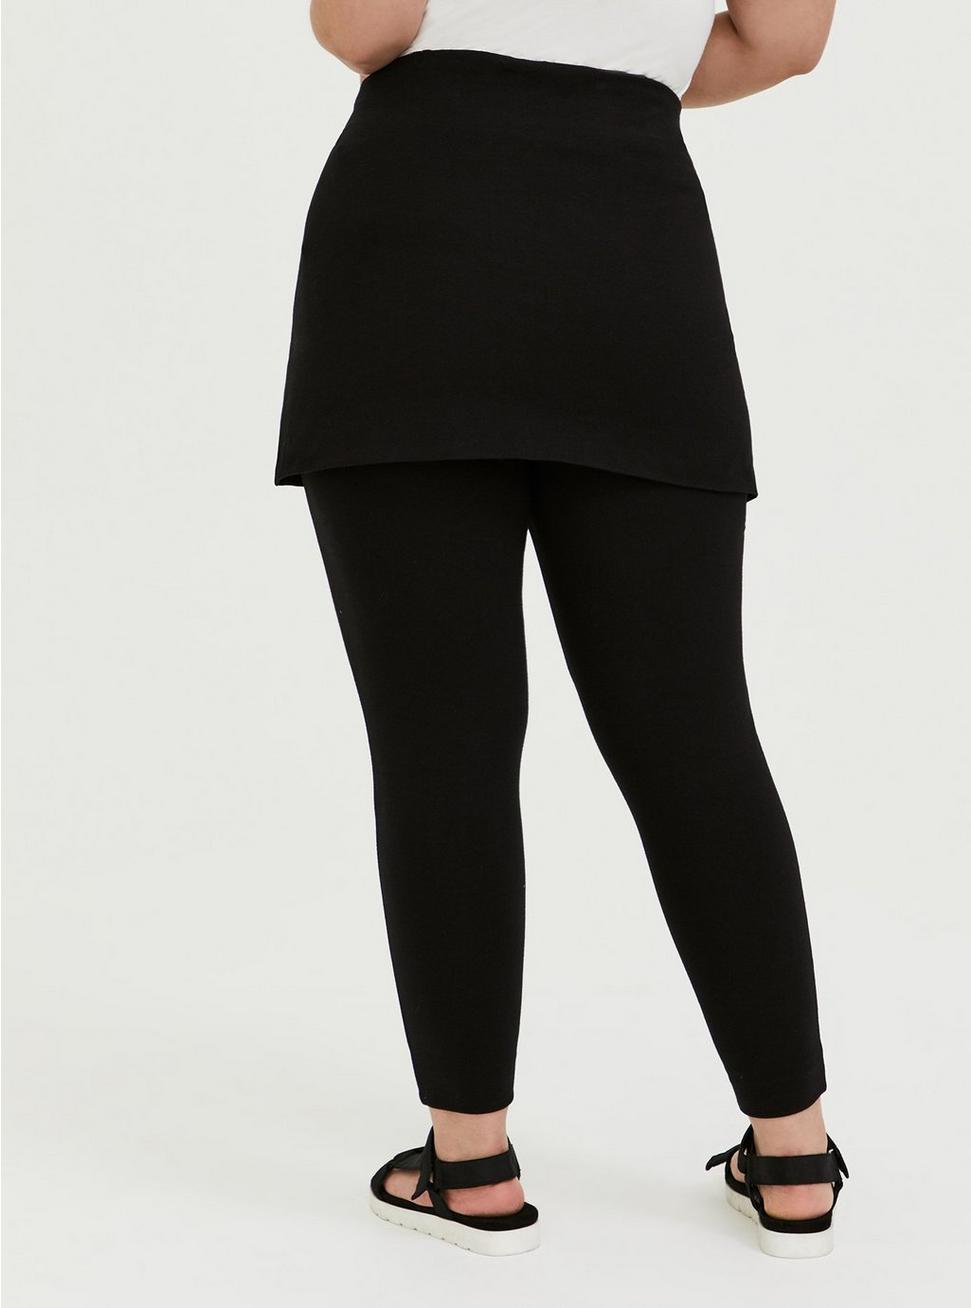 Plus Size - Premium Legging - Skirt Waist Black - Torrid